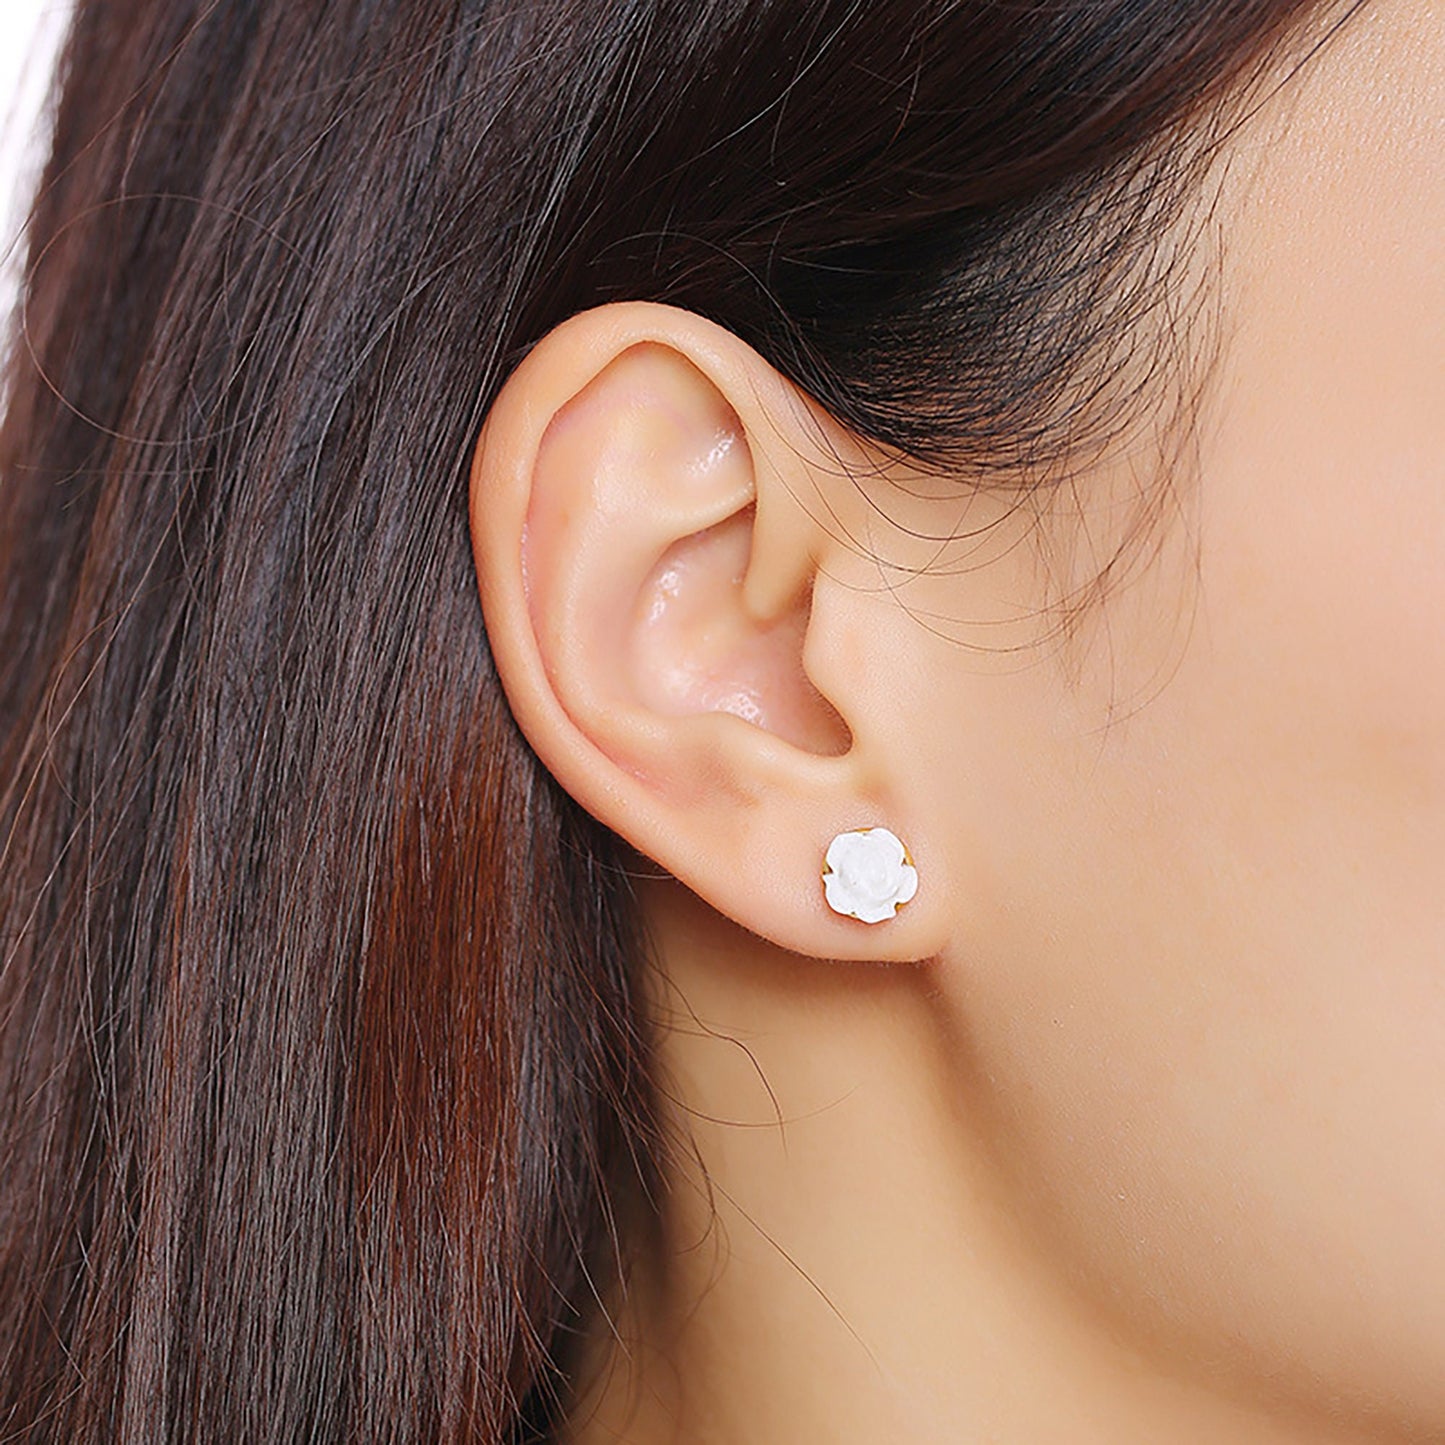 Titanium Rose Stud Earrings, Black White Flower, Screw Back Non Tarnish Earrings, Implant Grade Titanium Waterproof Earrings, Minimalist